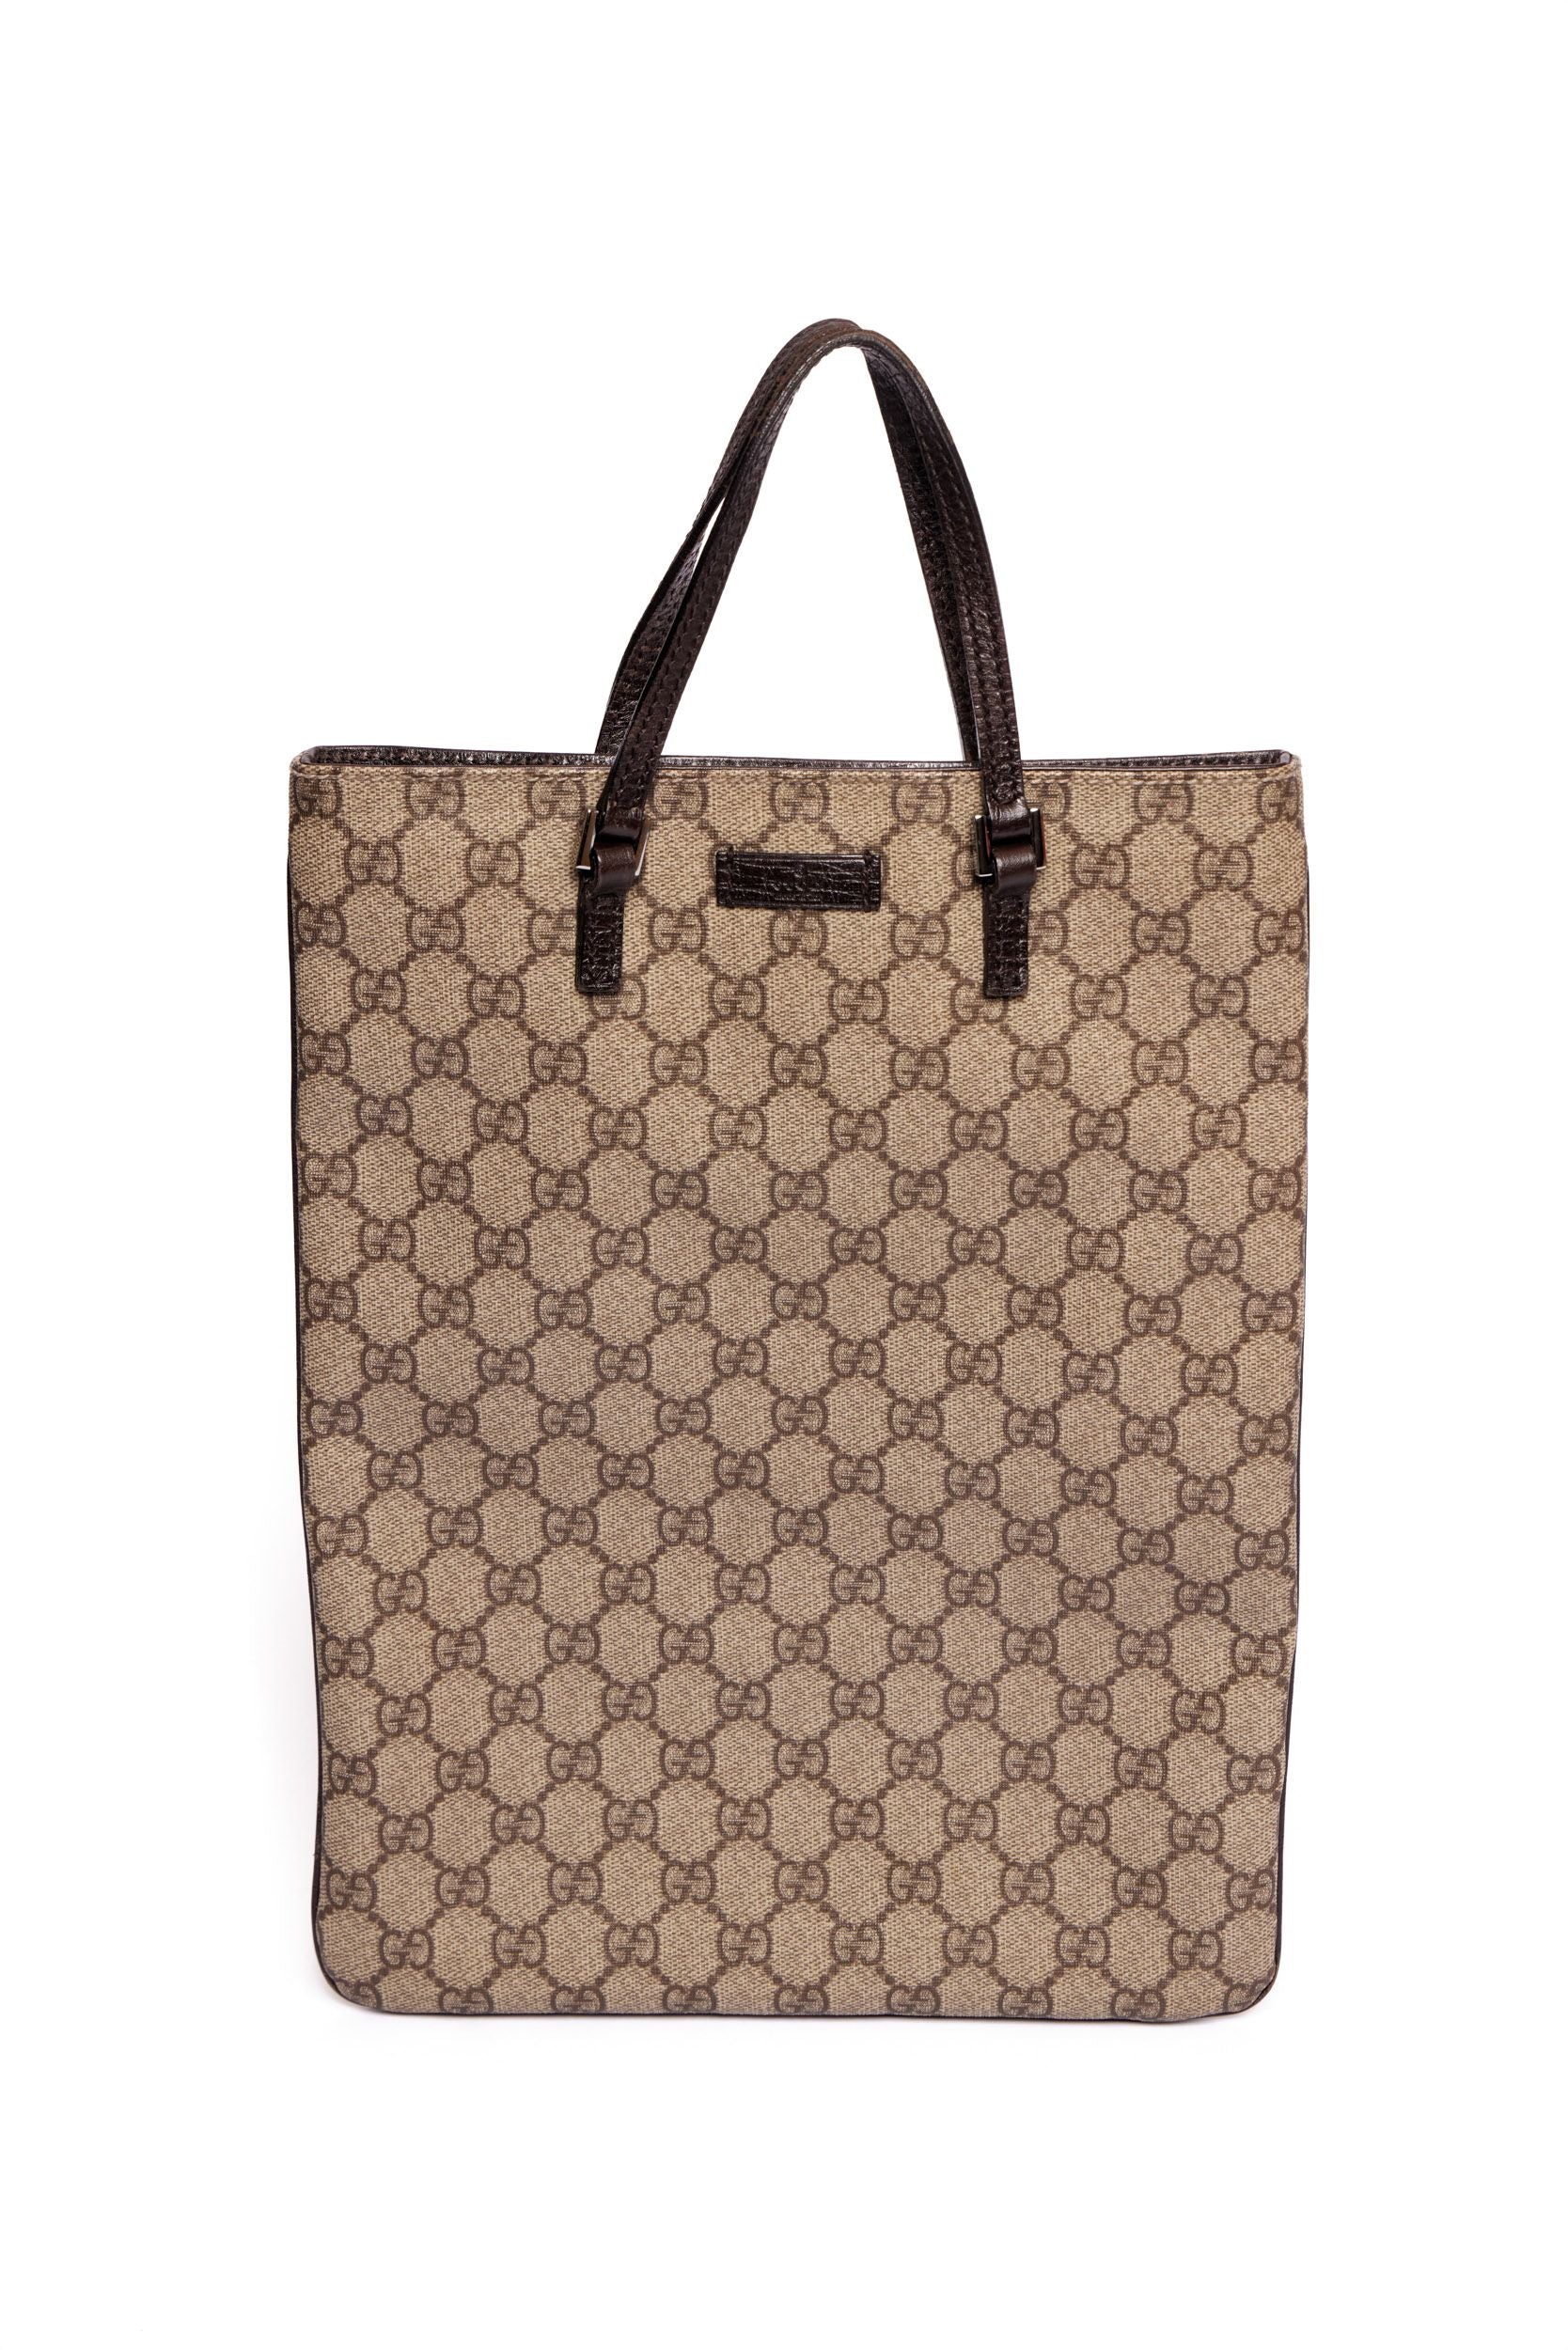 Gucci Monogram Satchel Bag